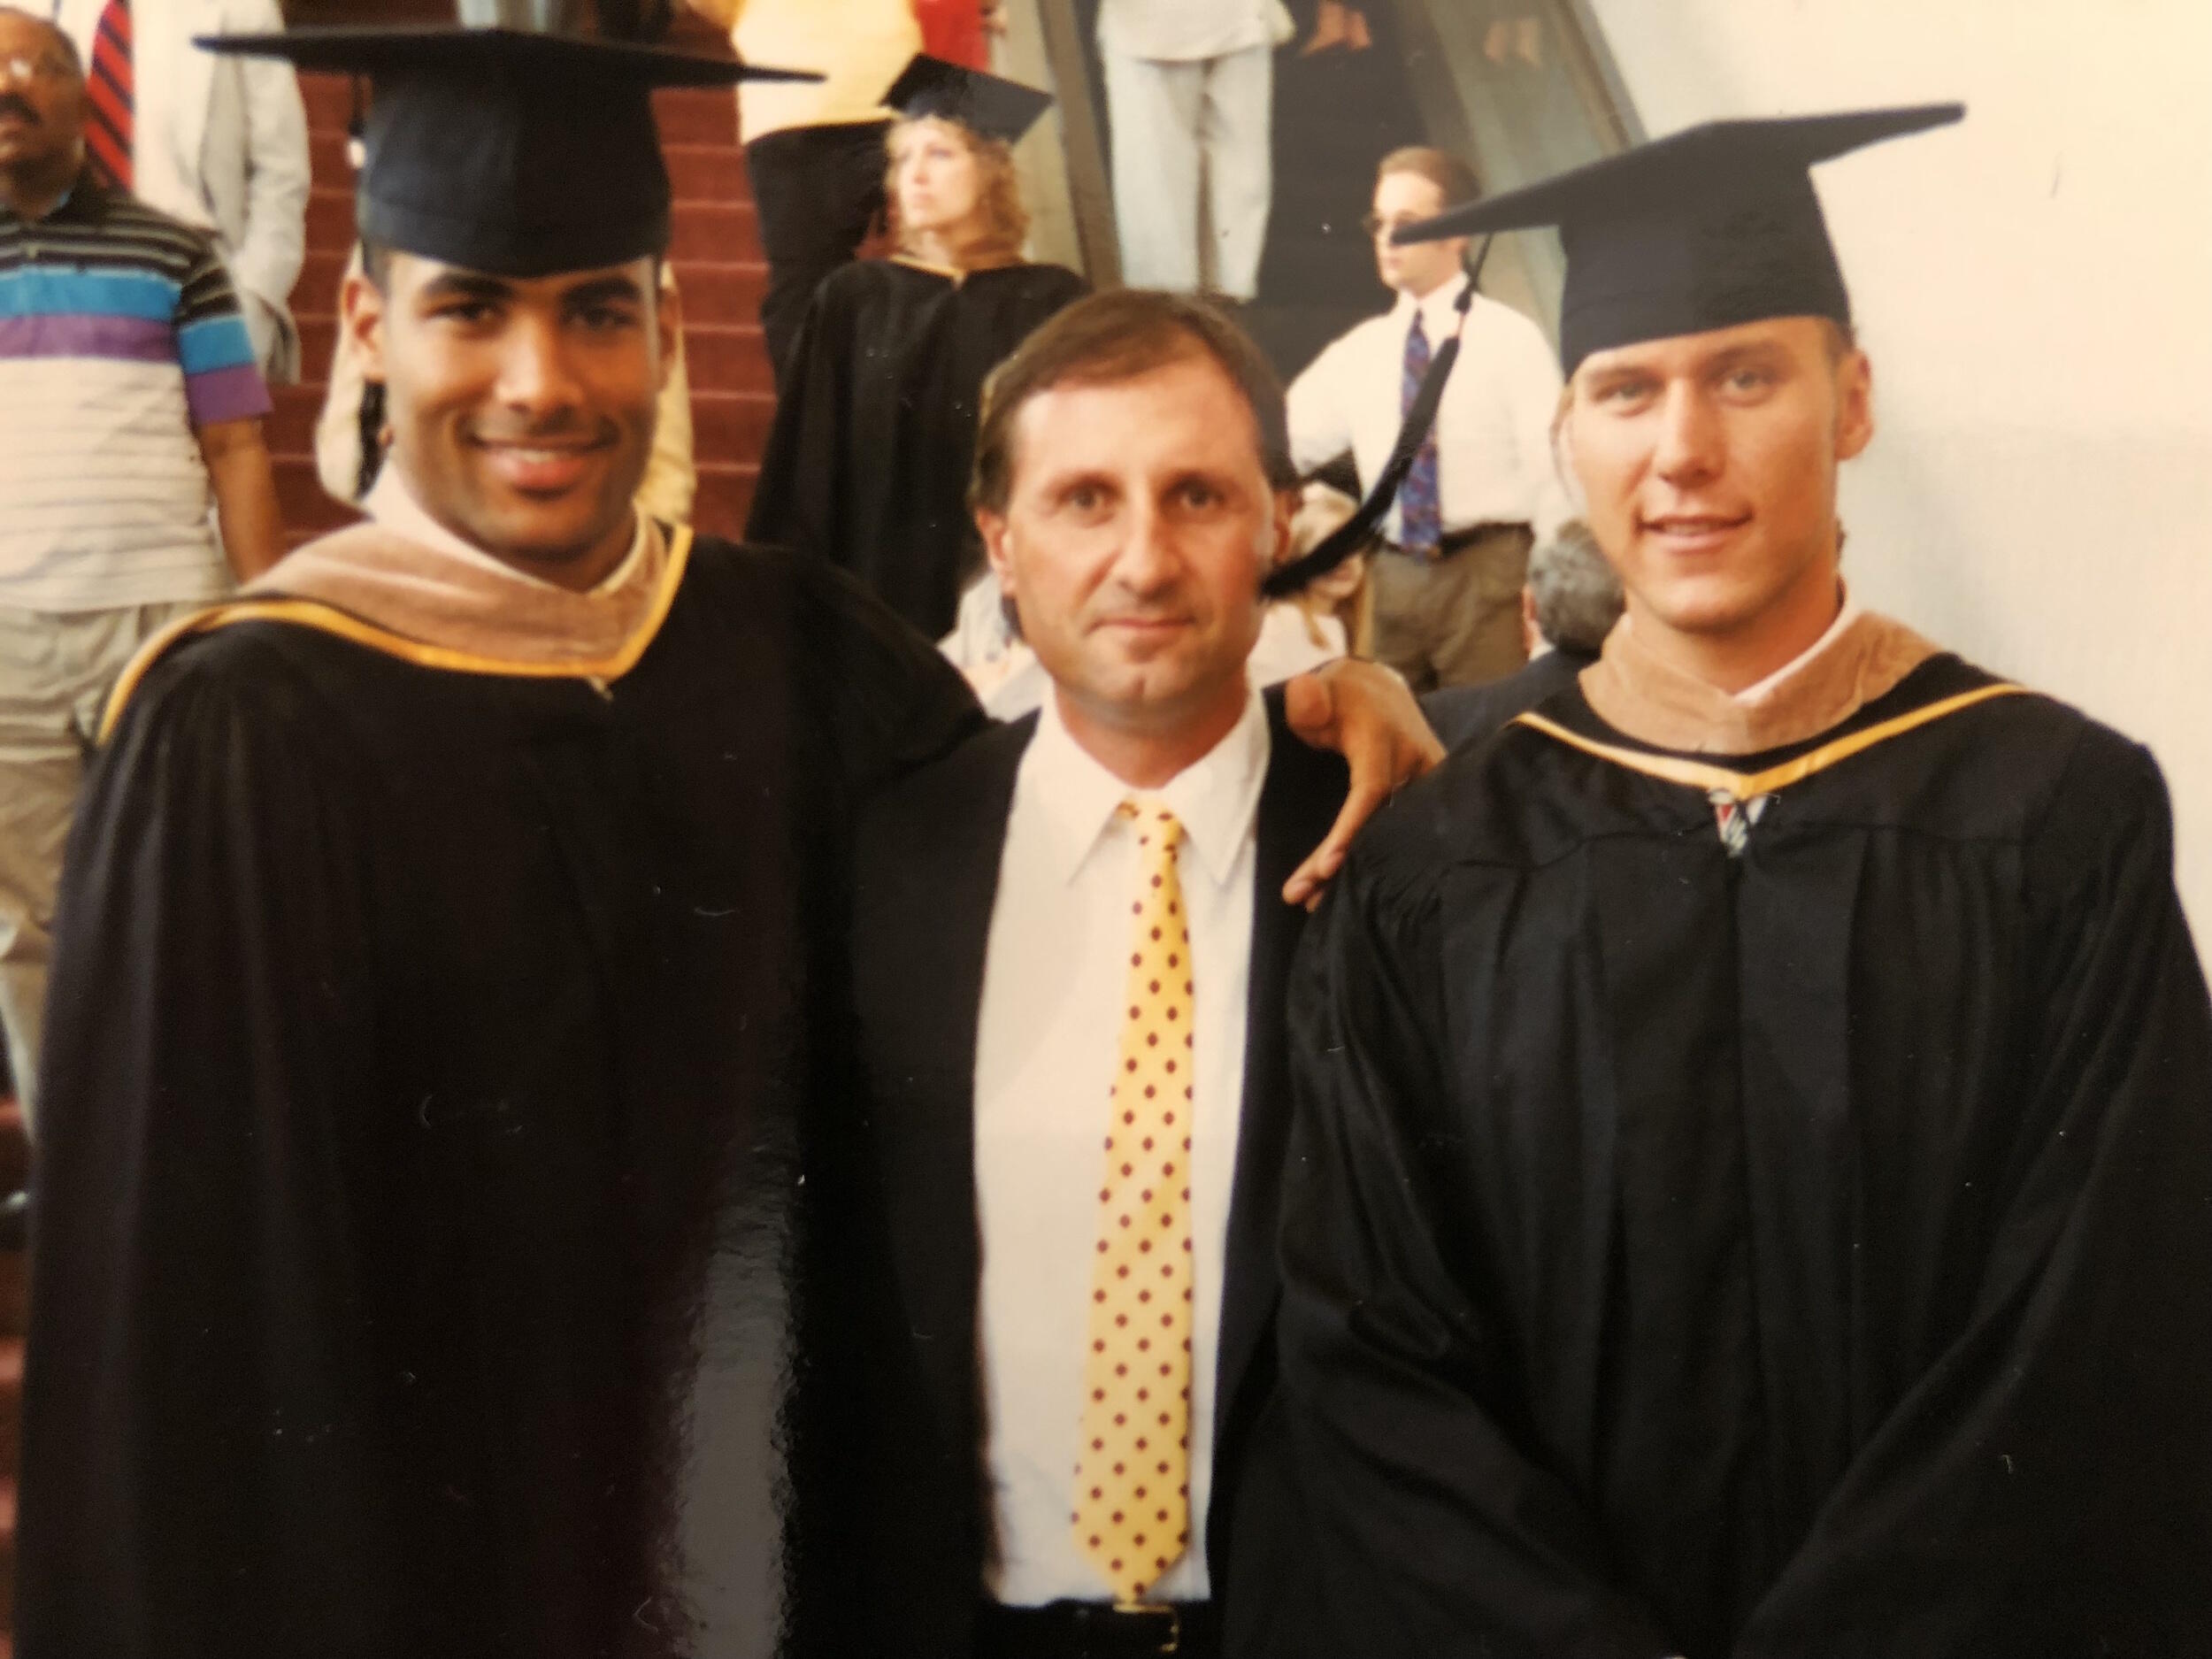 Boris Kodjoe celebrates at his graduation ceremony in 1996 with VCU tennis coach Paul Kostin (center) and his "twin," Jonas Elmblad. (Photo courtesy of Jonas Elmblad)